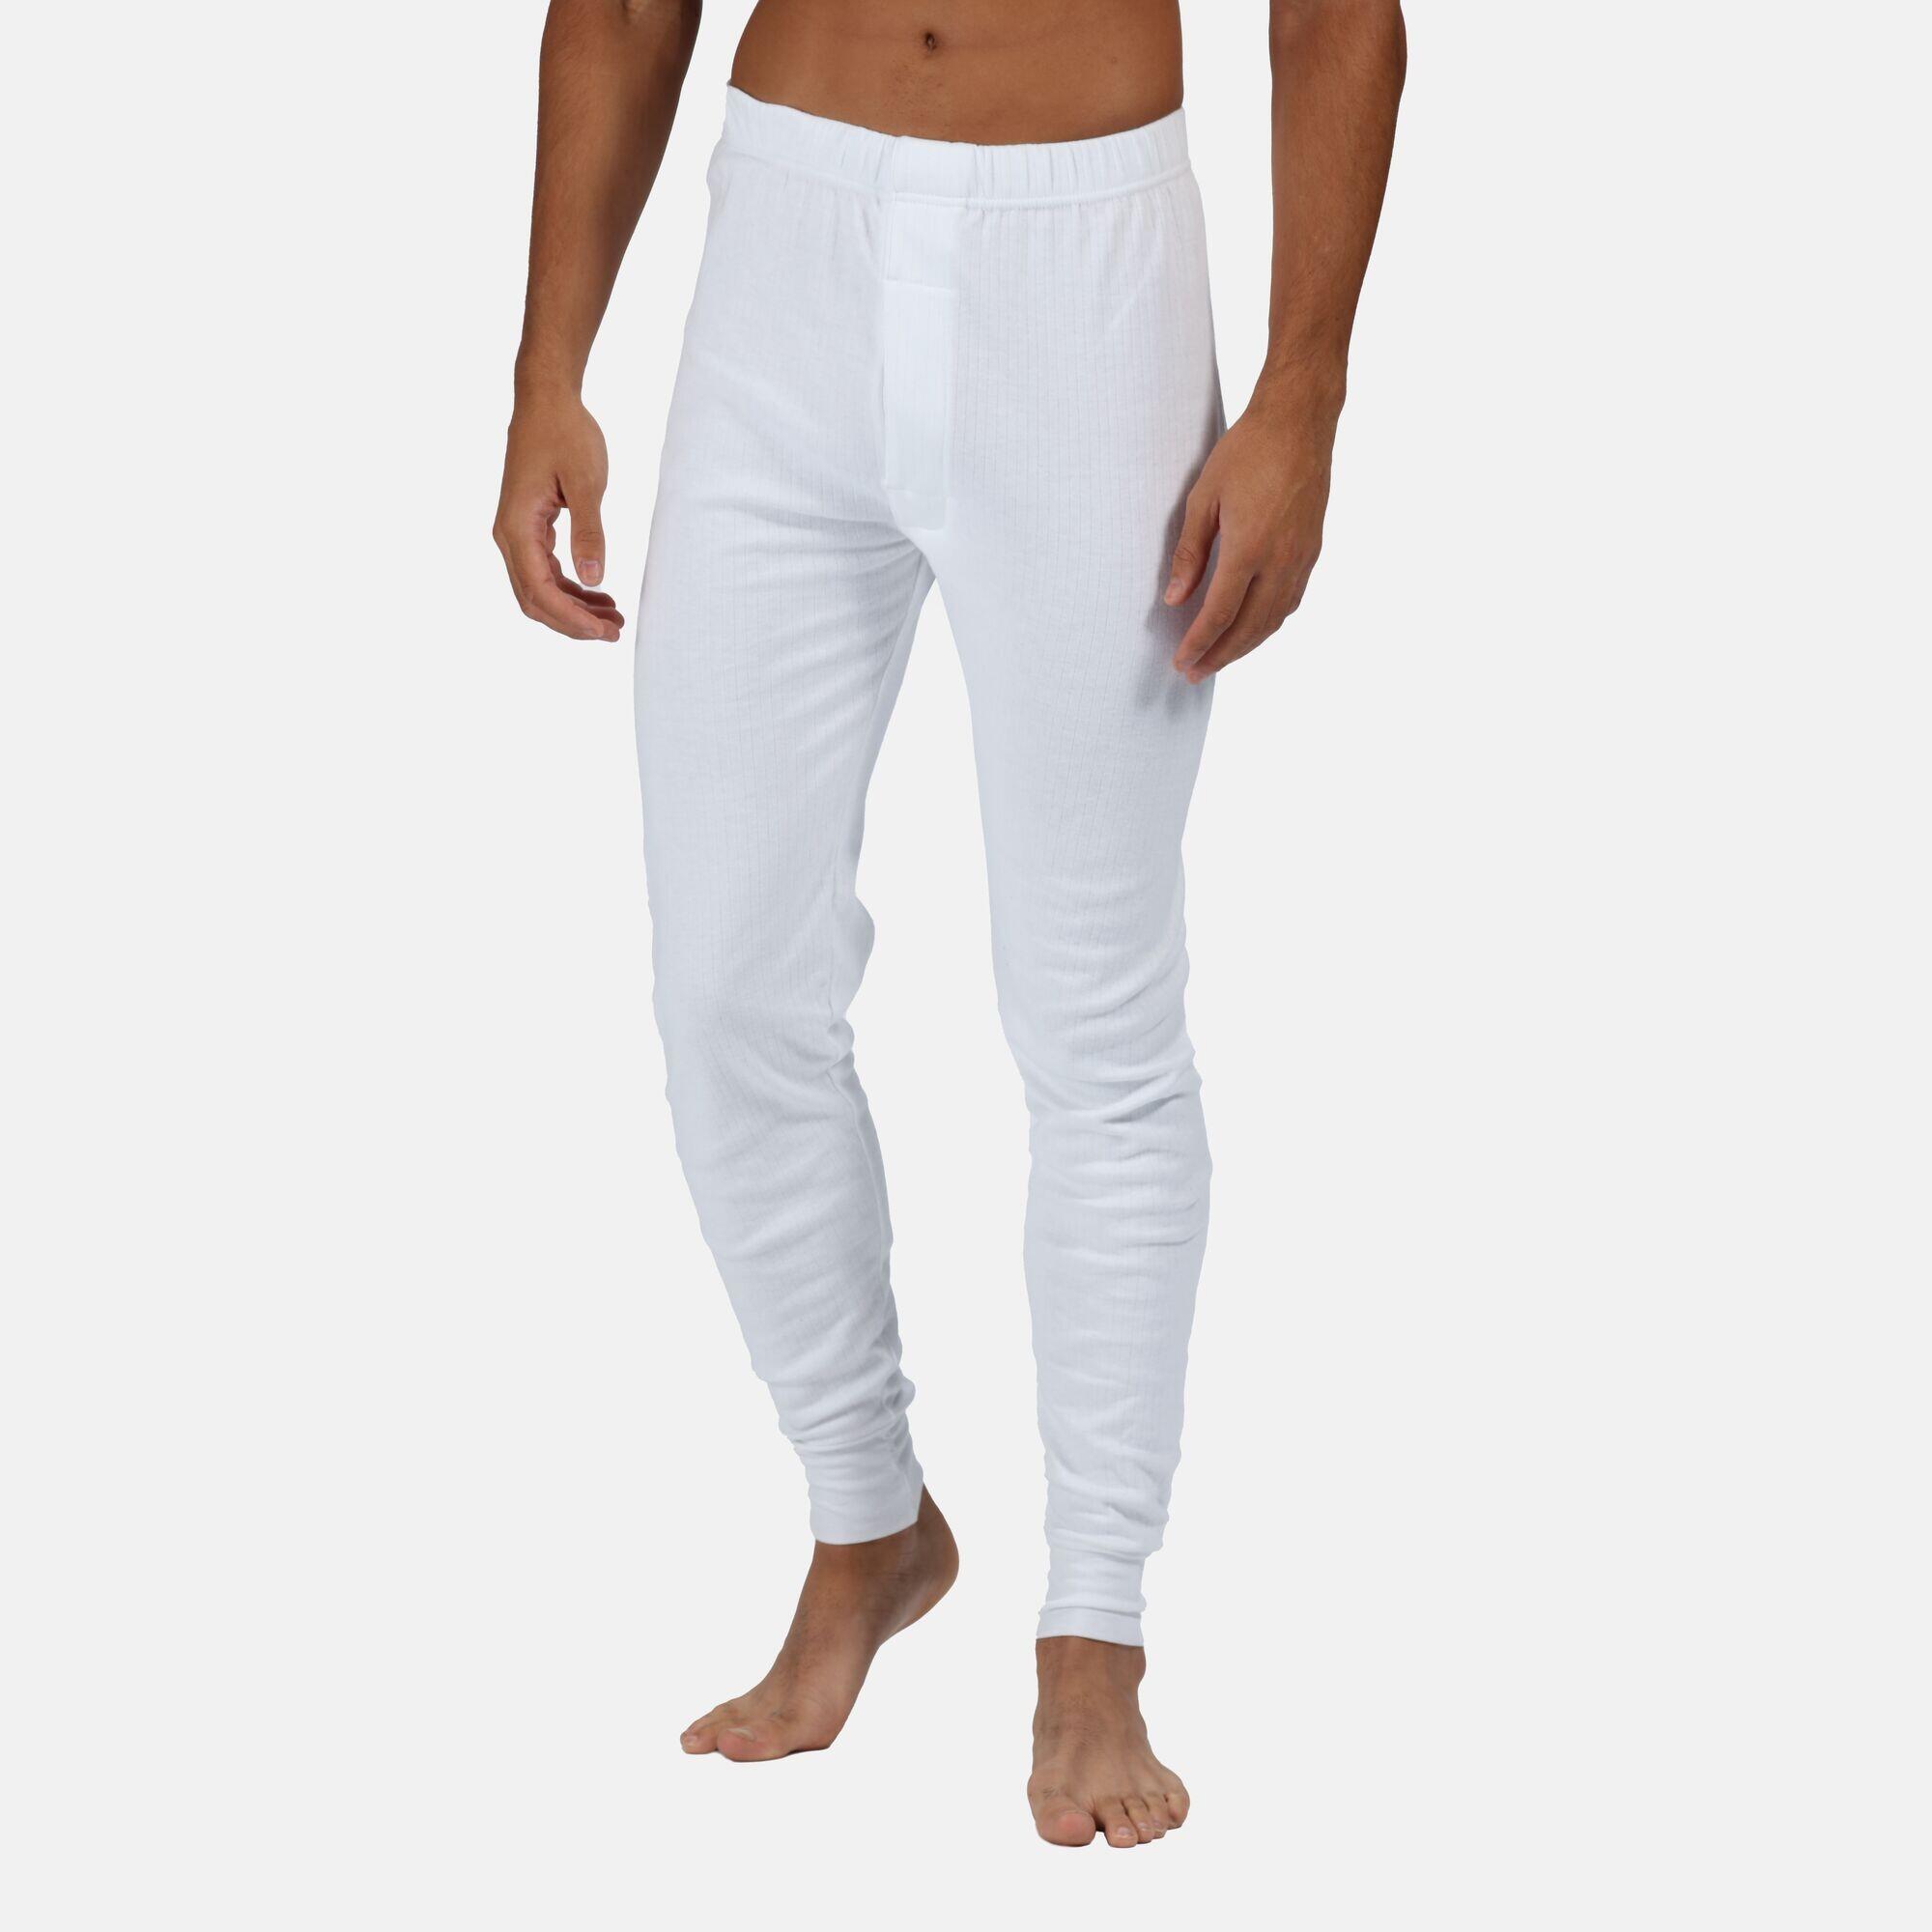 Mens Thermal Underwear Long Johns (White) 4/5